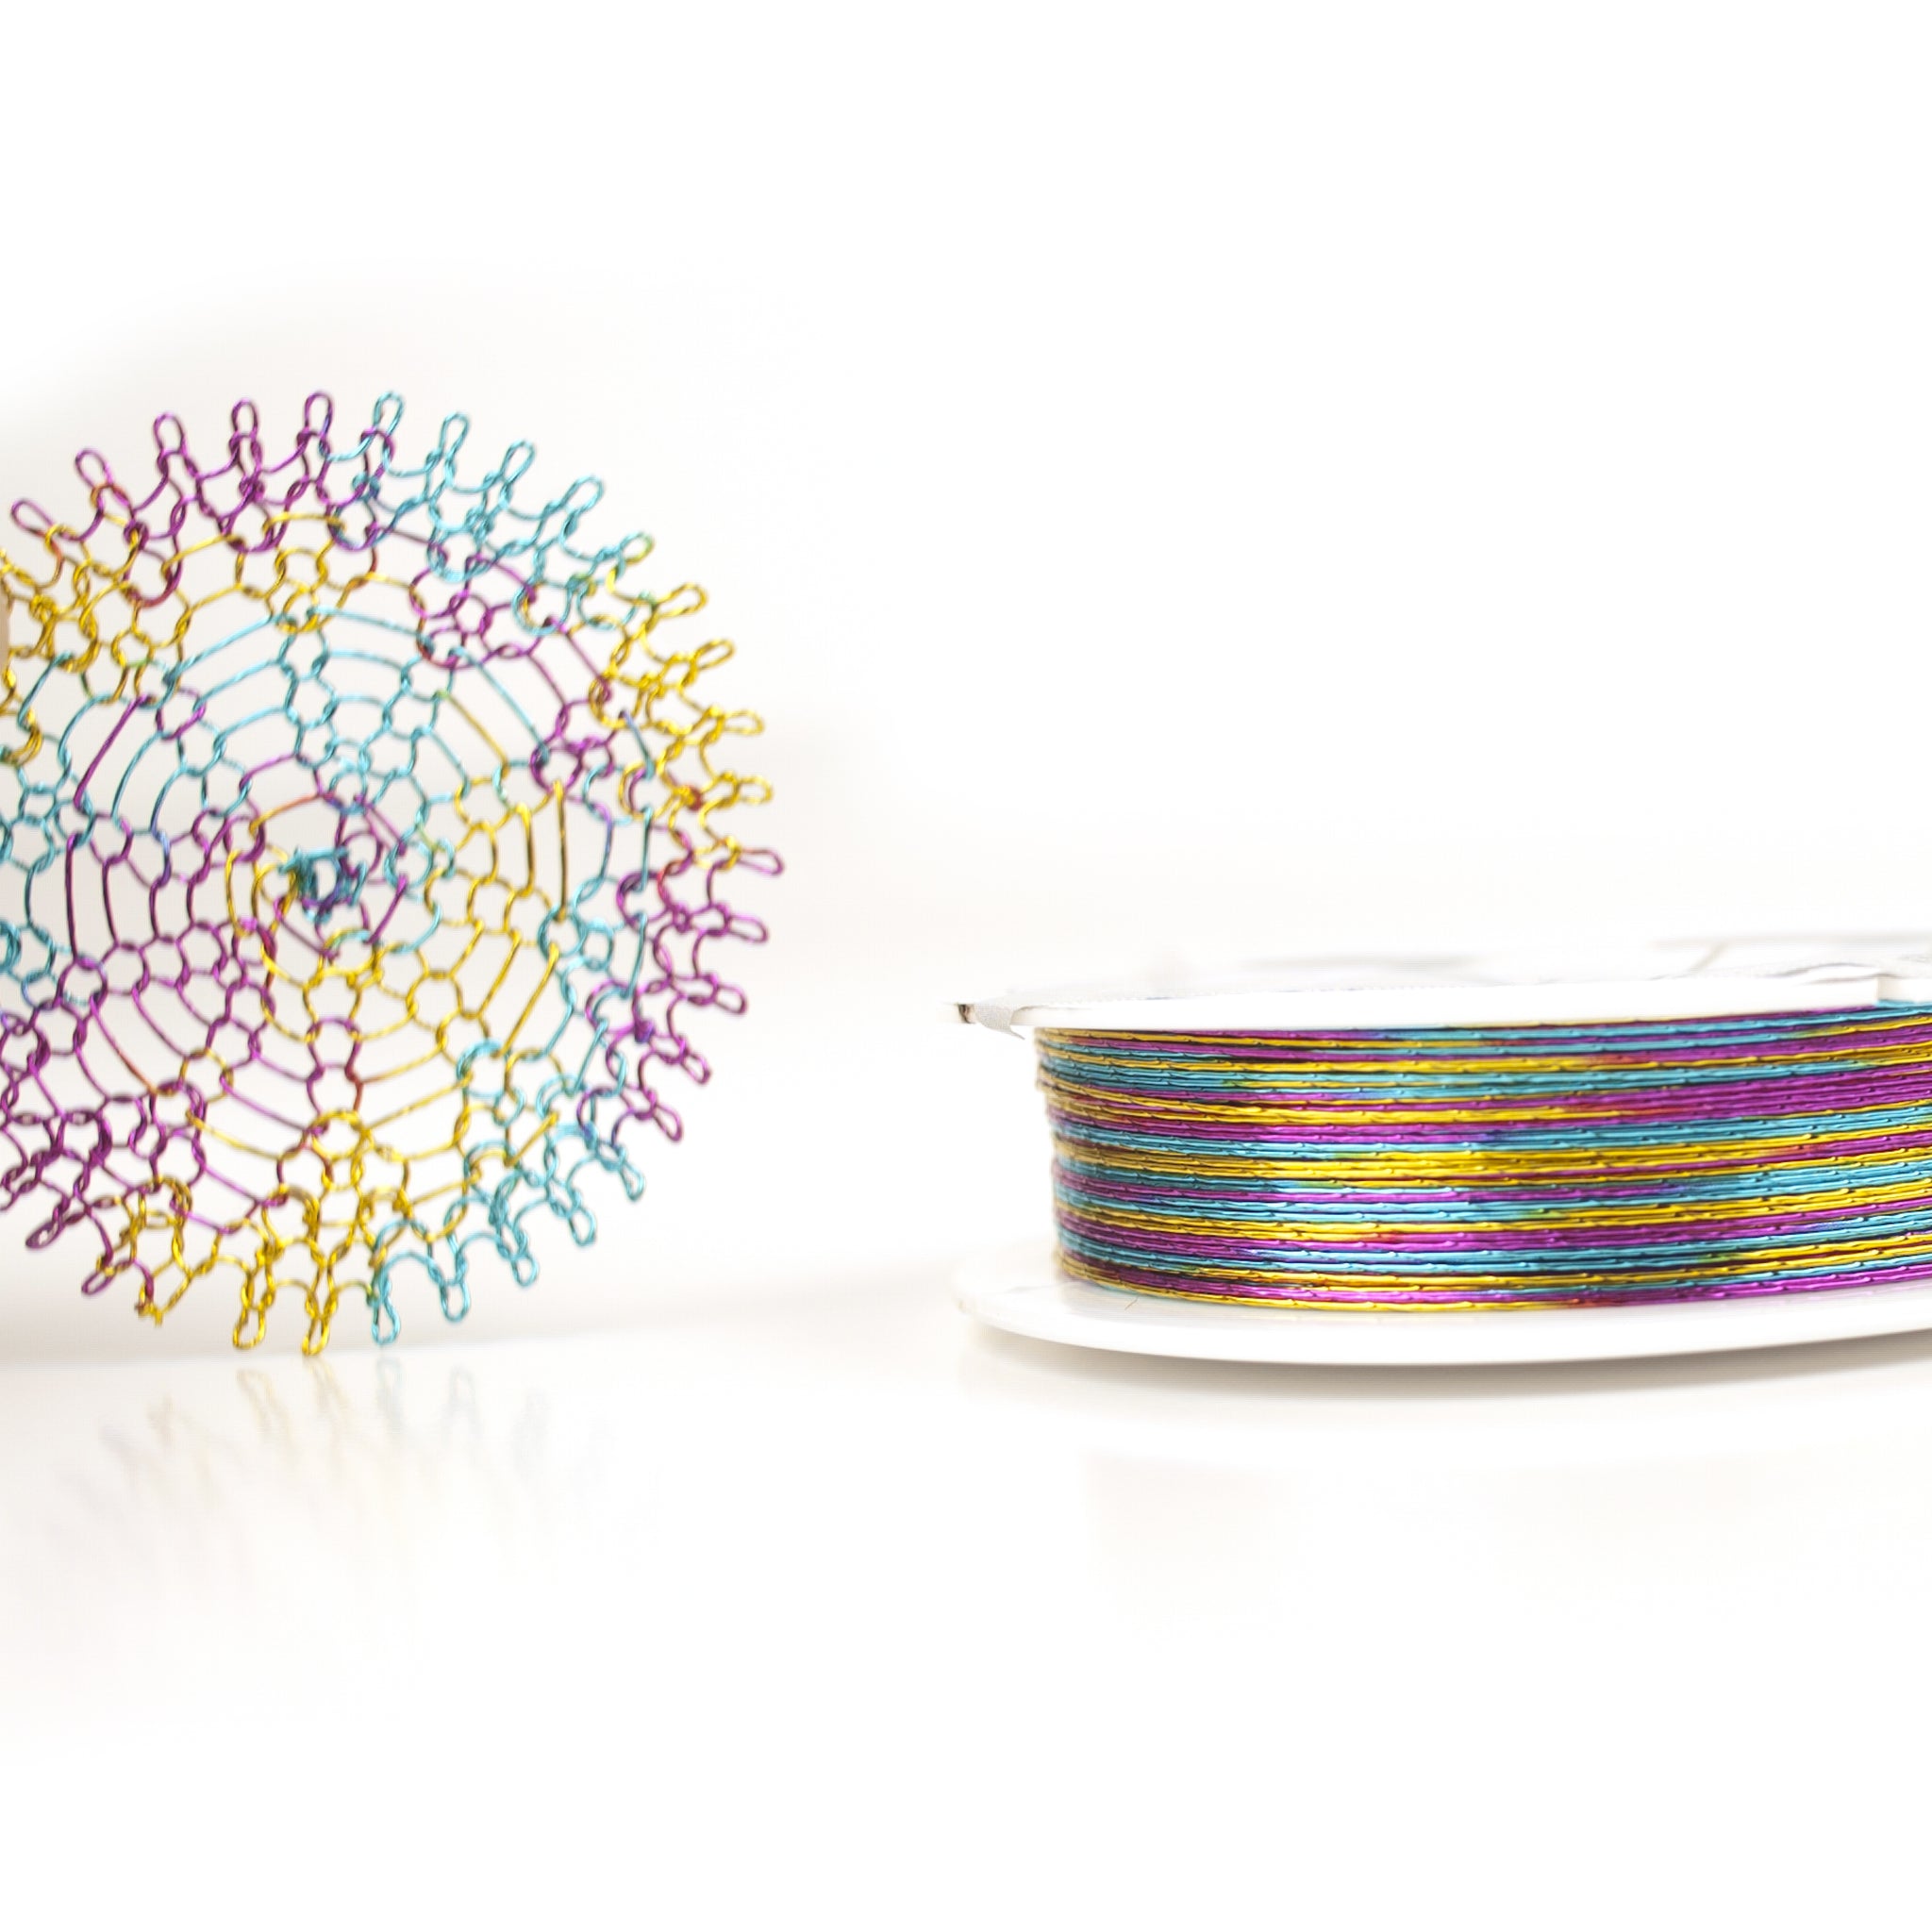 Premium Craft Wire, jewelry wire, Extra long spools - Yooladesign